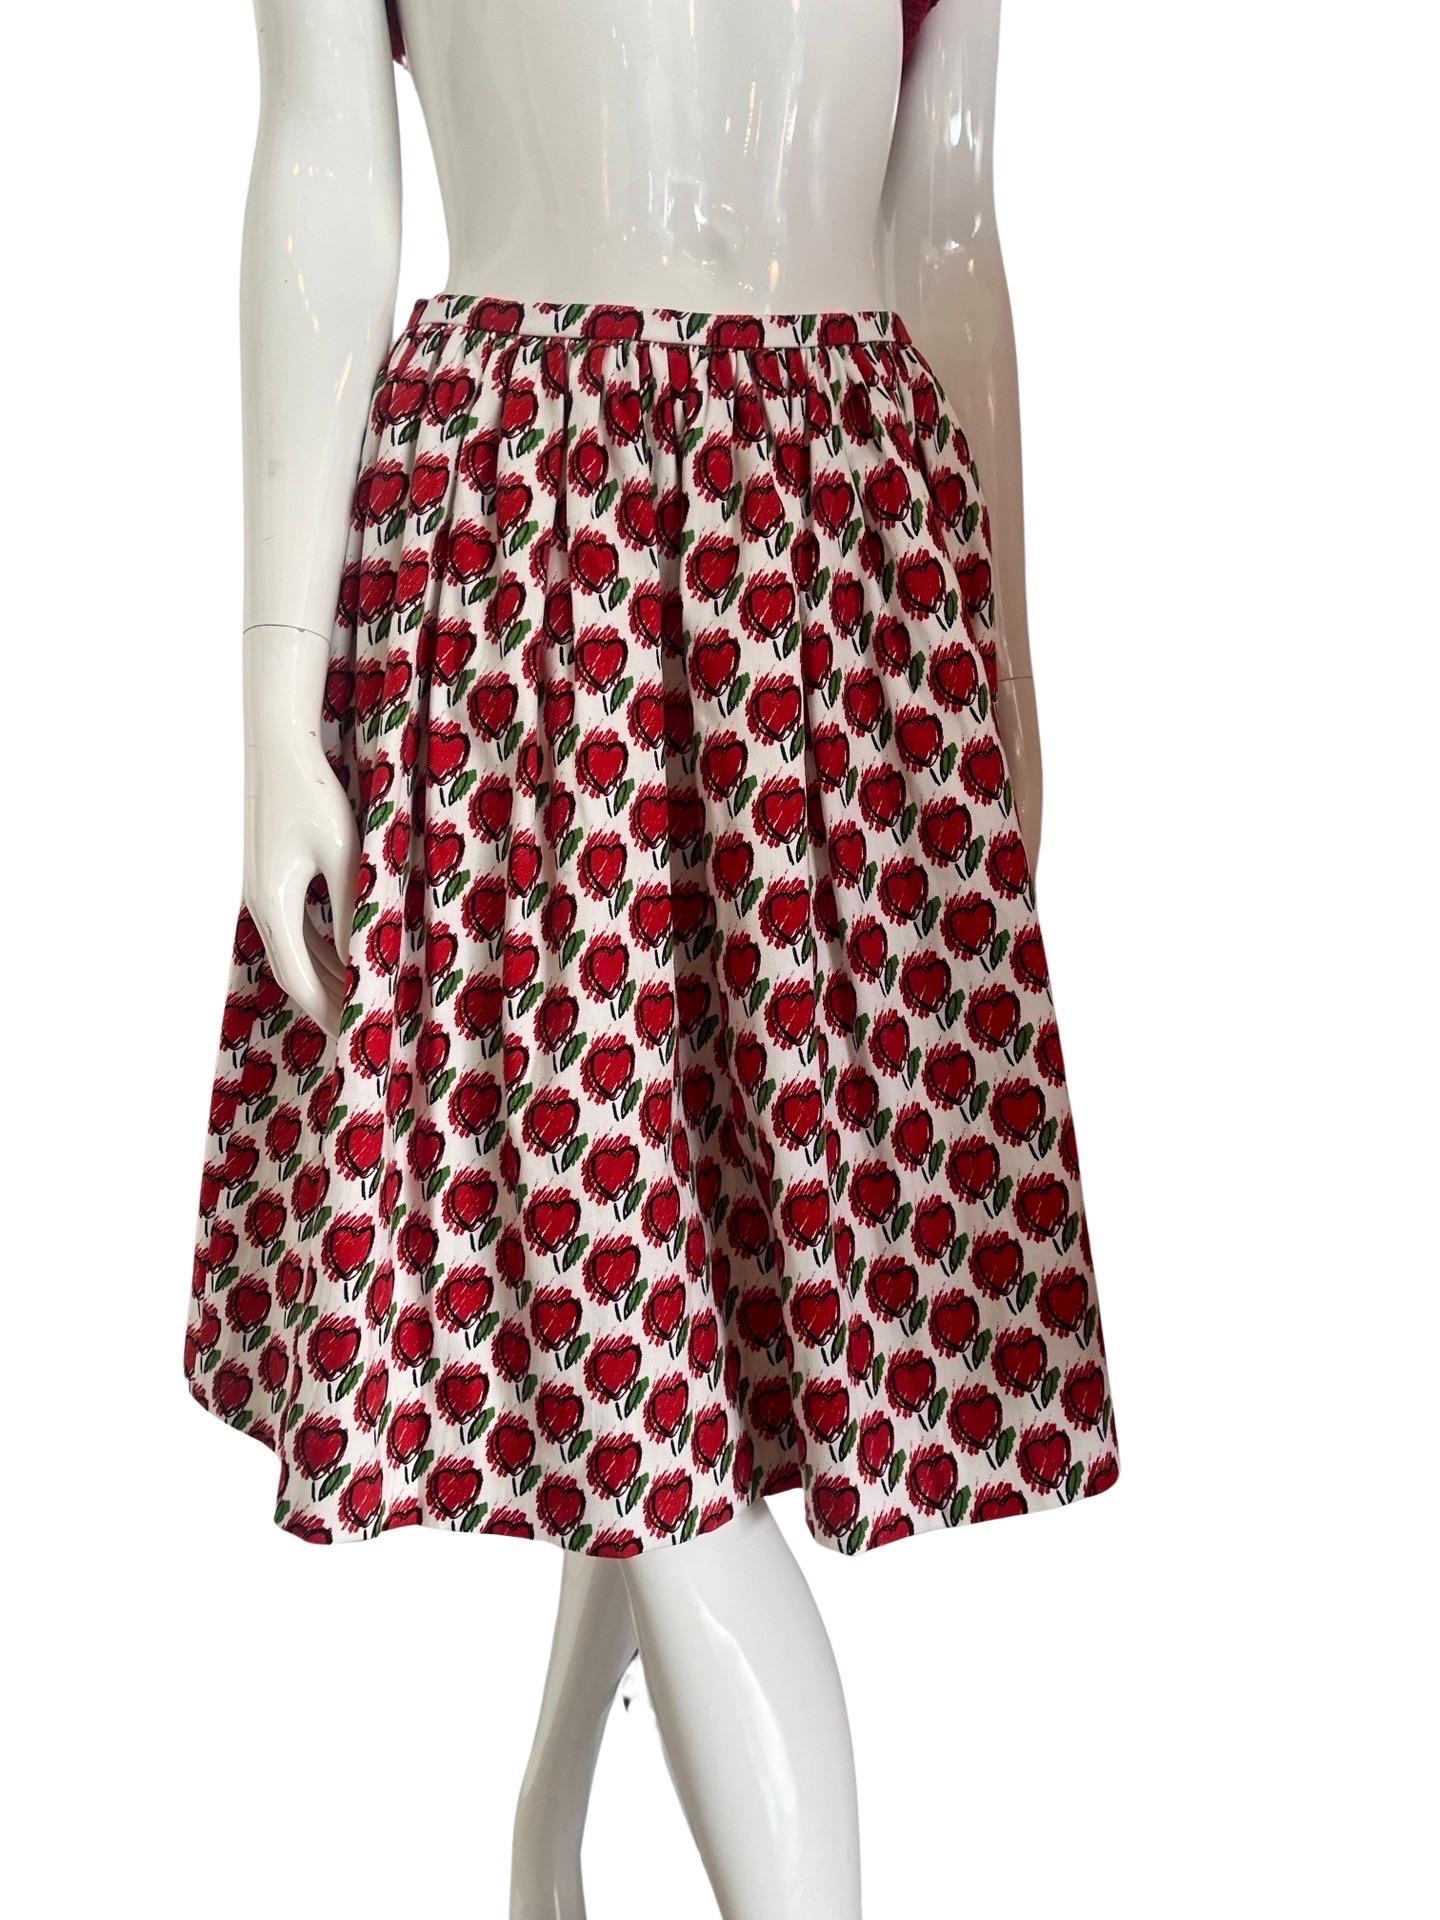 2016 Prada Cotton Hearts Full Skirt In Good Condition For Sale In Miami, FL